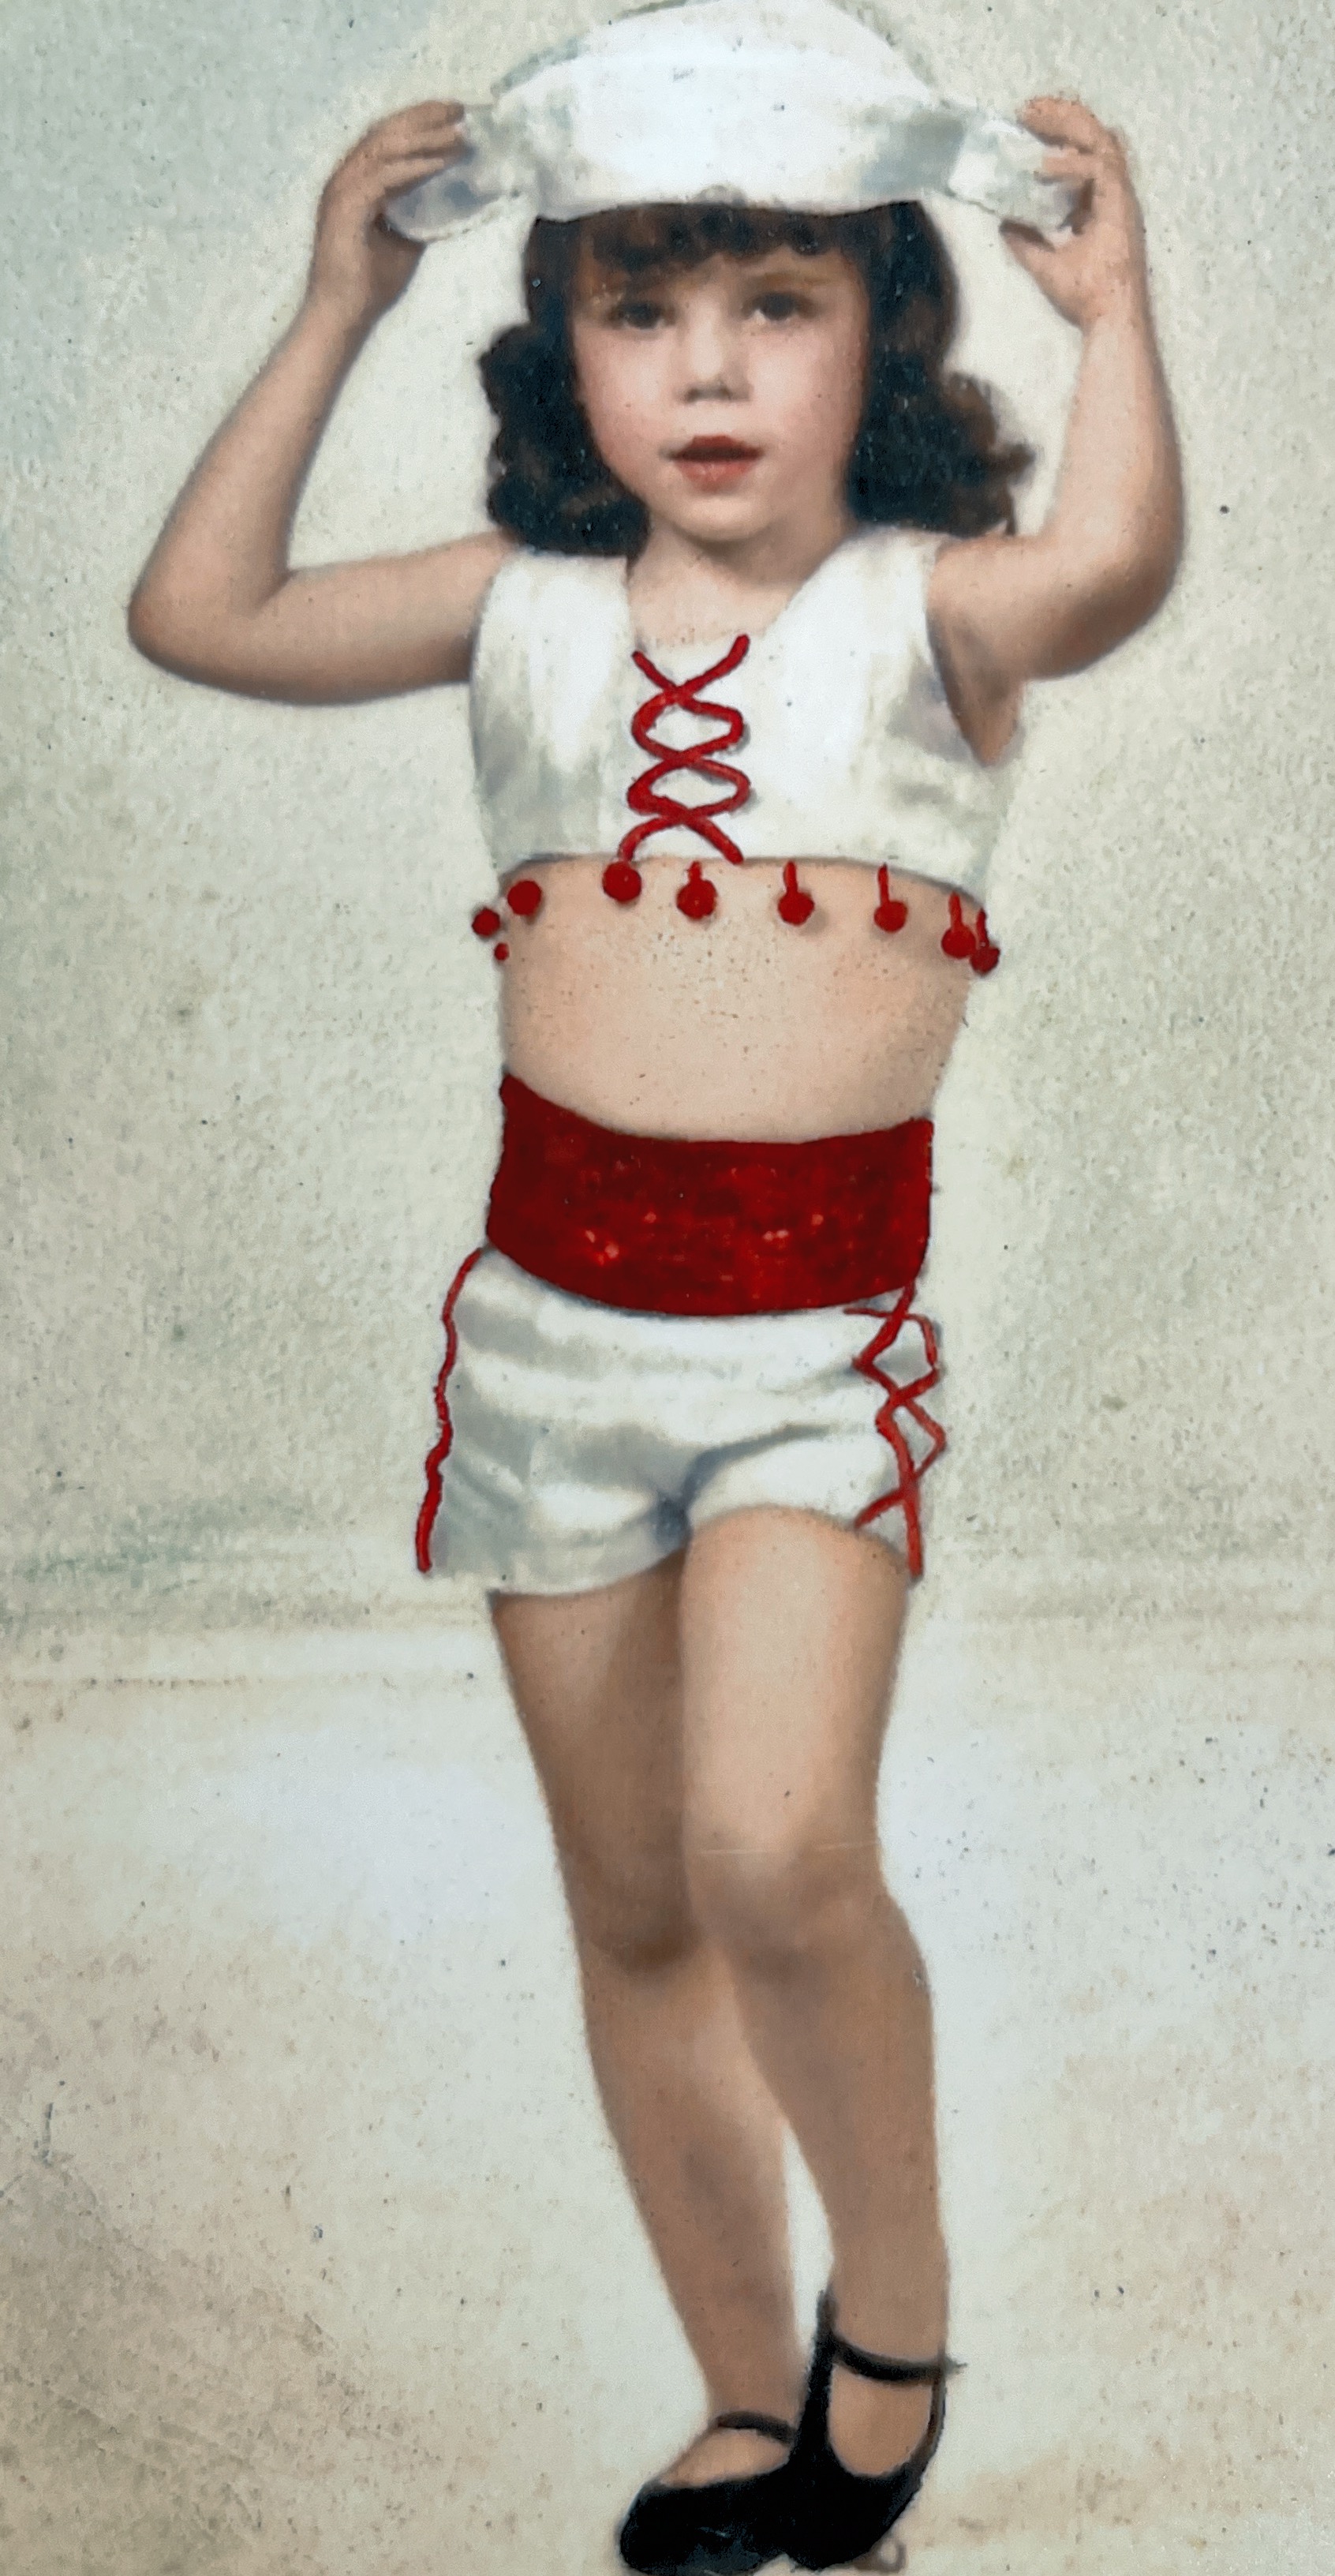 Amy in dance costume around 1960